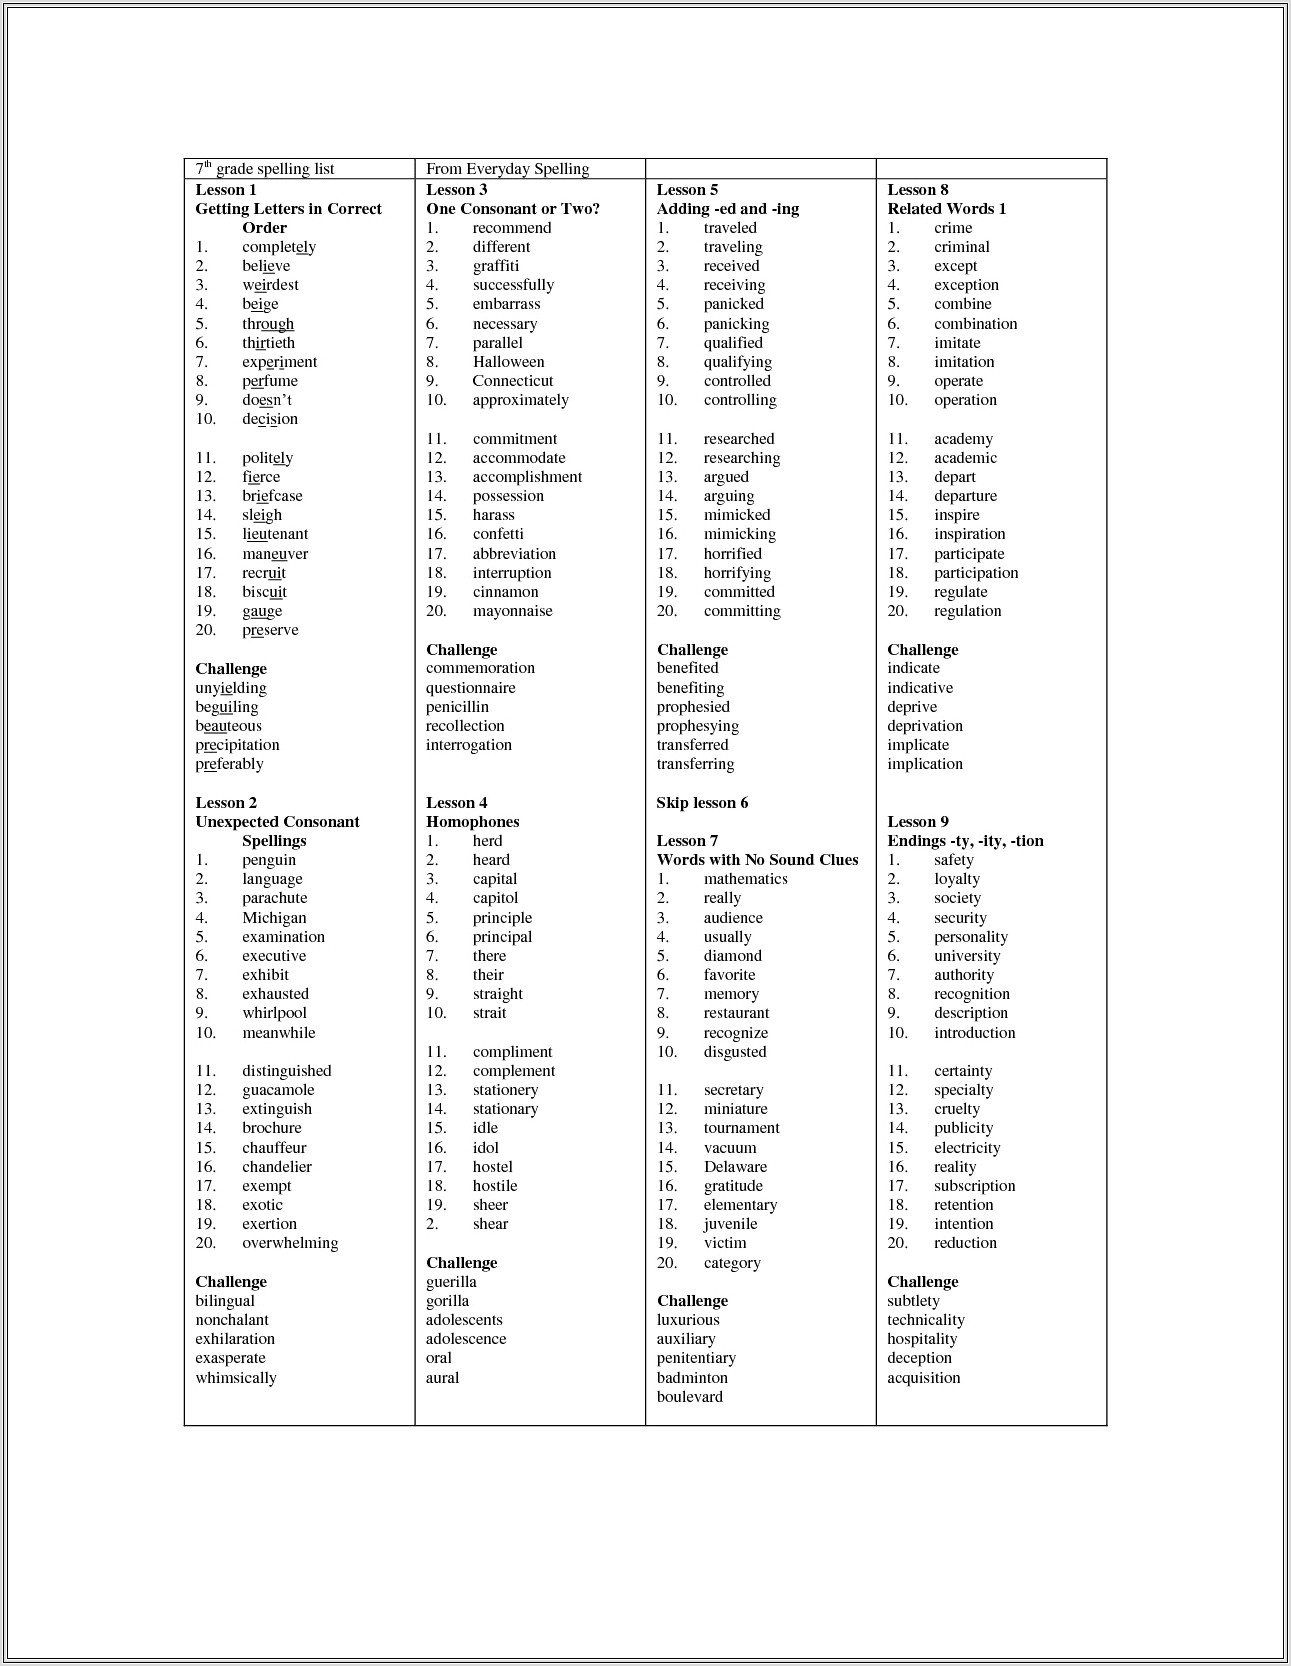 8th-grade-spelling-words-worksheets-worksheet-restiumani-resume-rvywpvwjyl